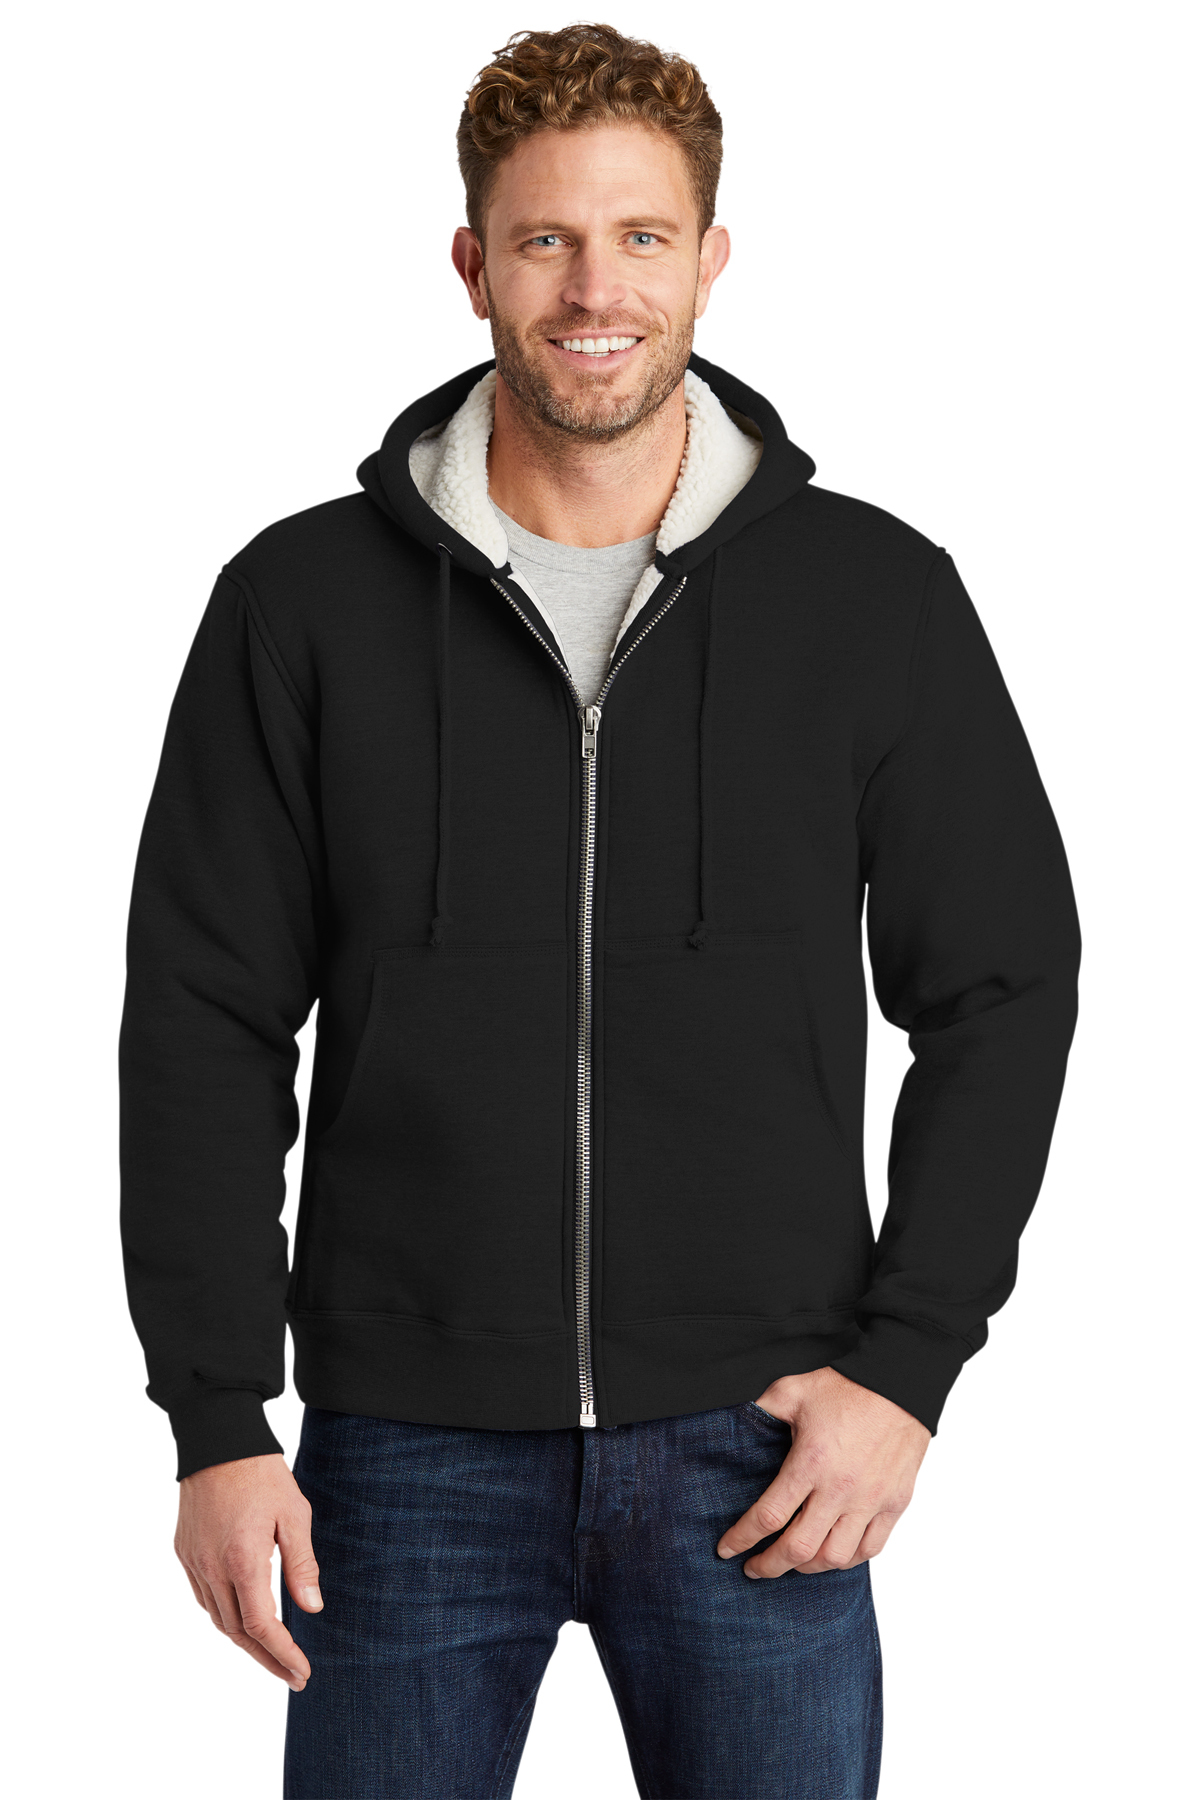 eipogp Men's Fleece Zip Sweatshirt with Hood,Warm Sherpa Lined Long Sleeve Big & Tall Fleece Hoodie for Outwear Pocket Coat 